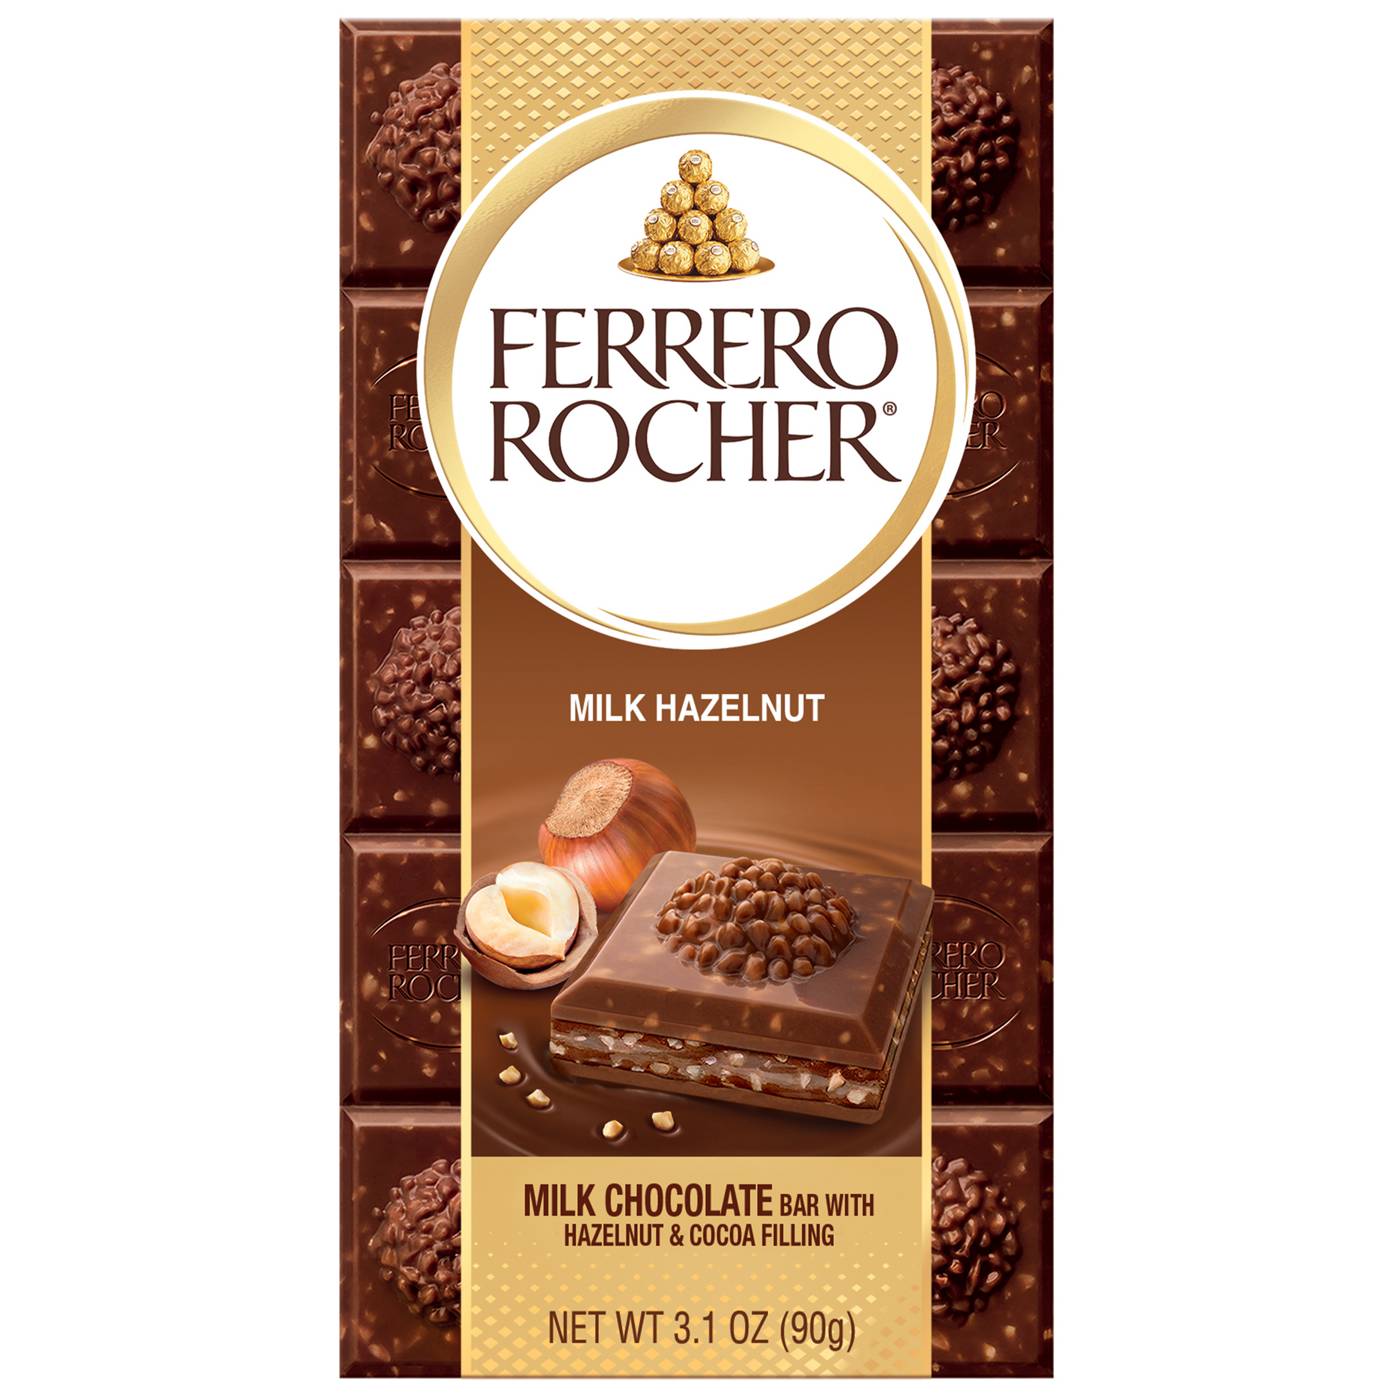 Ferrero Rocher Milk Hazelnut Chocolate Bar; image 1 of 4